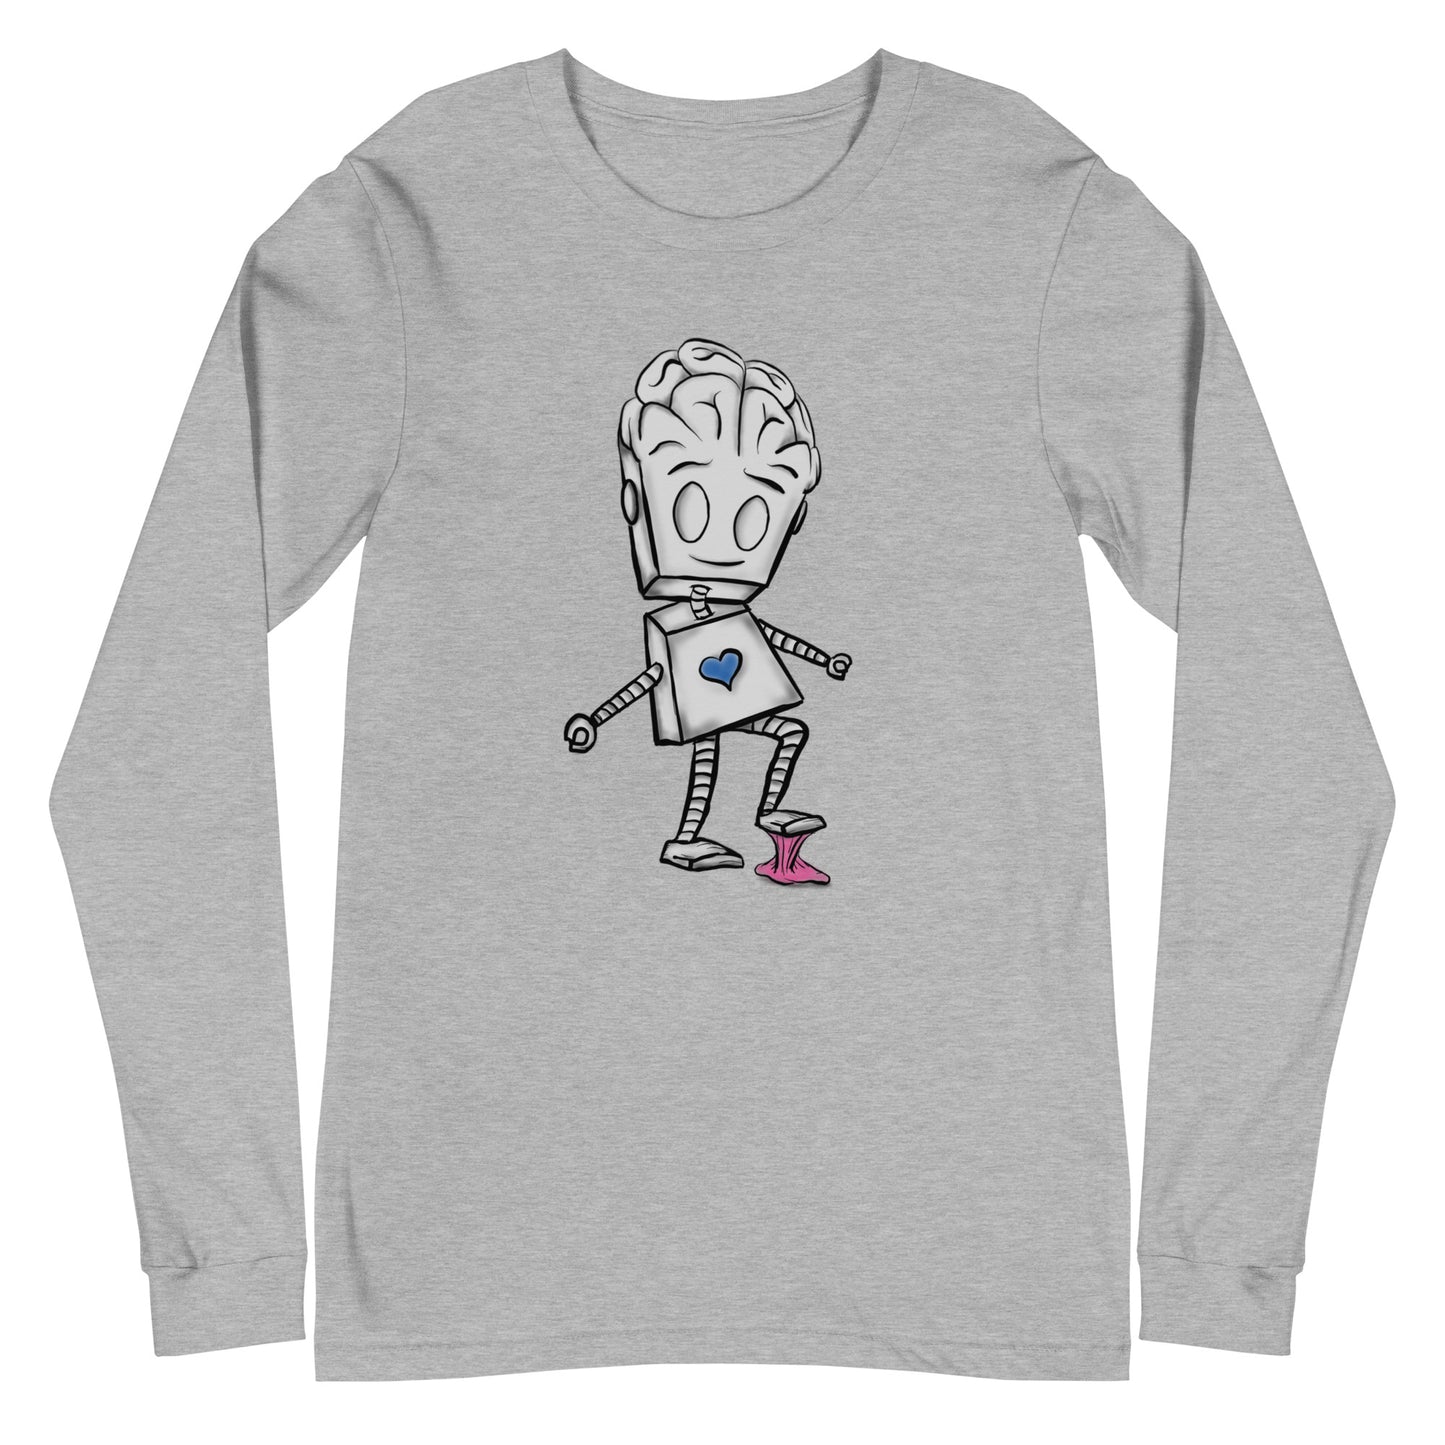 "Adorable Robot" Long-Sleeve Shirt (Balance of Heart & Mind Version)